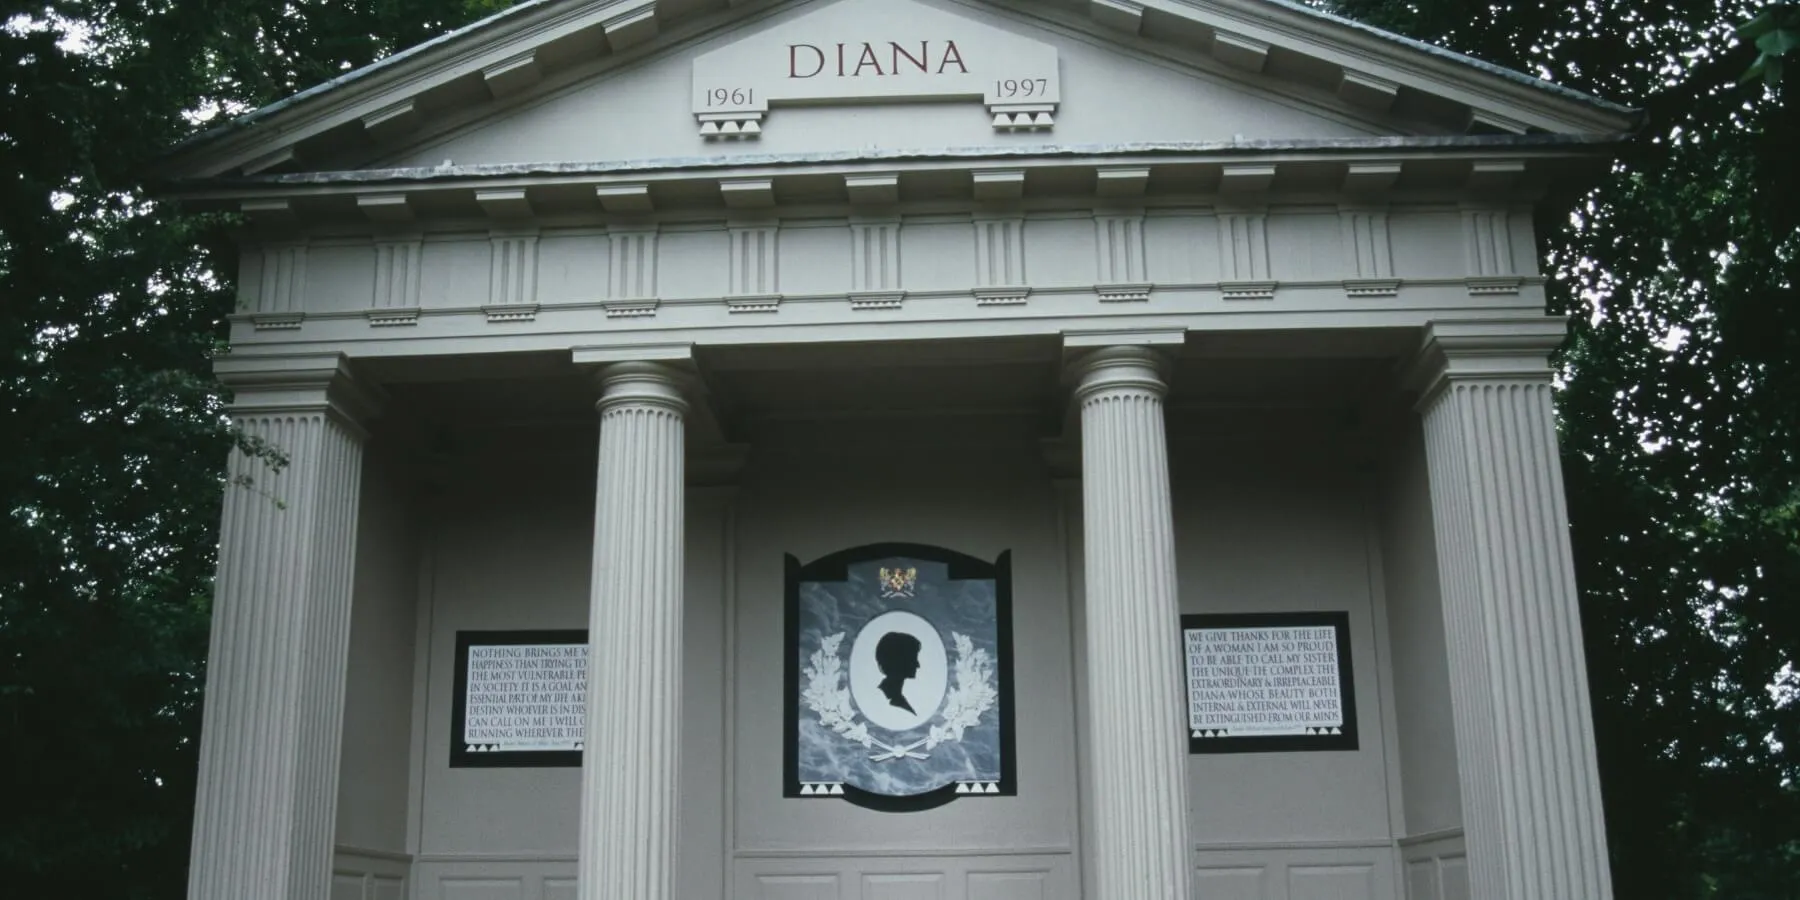 Princess Diana's memorial located at Althorp House